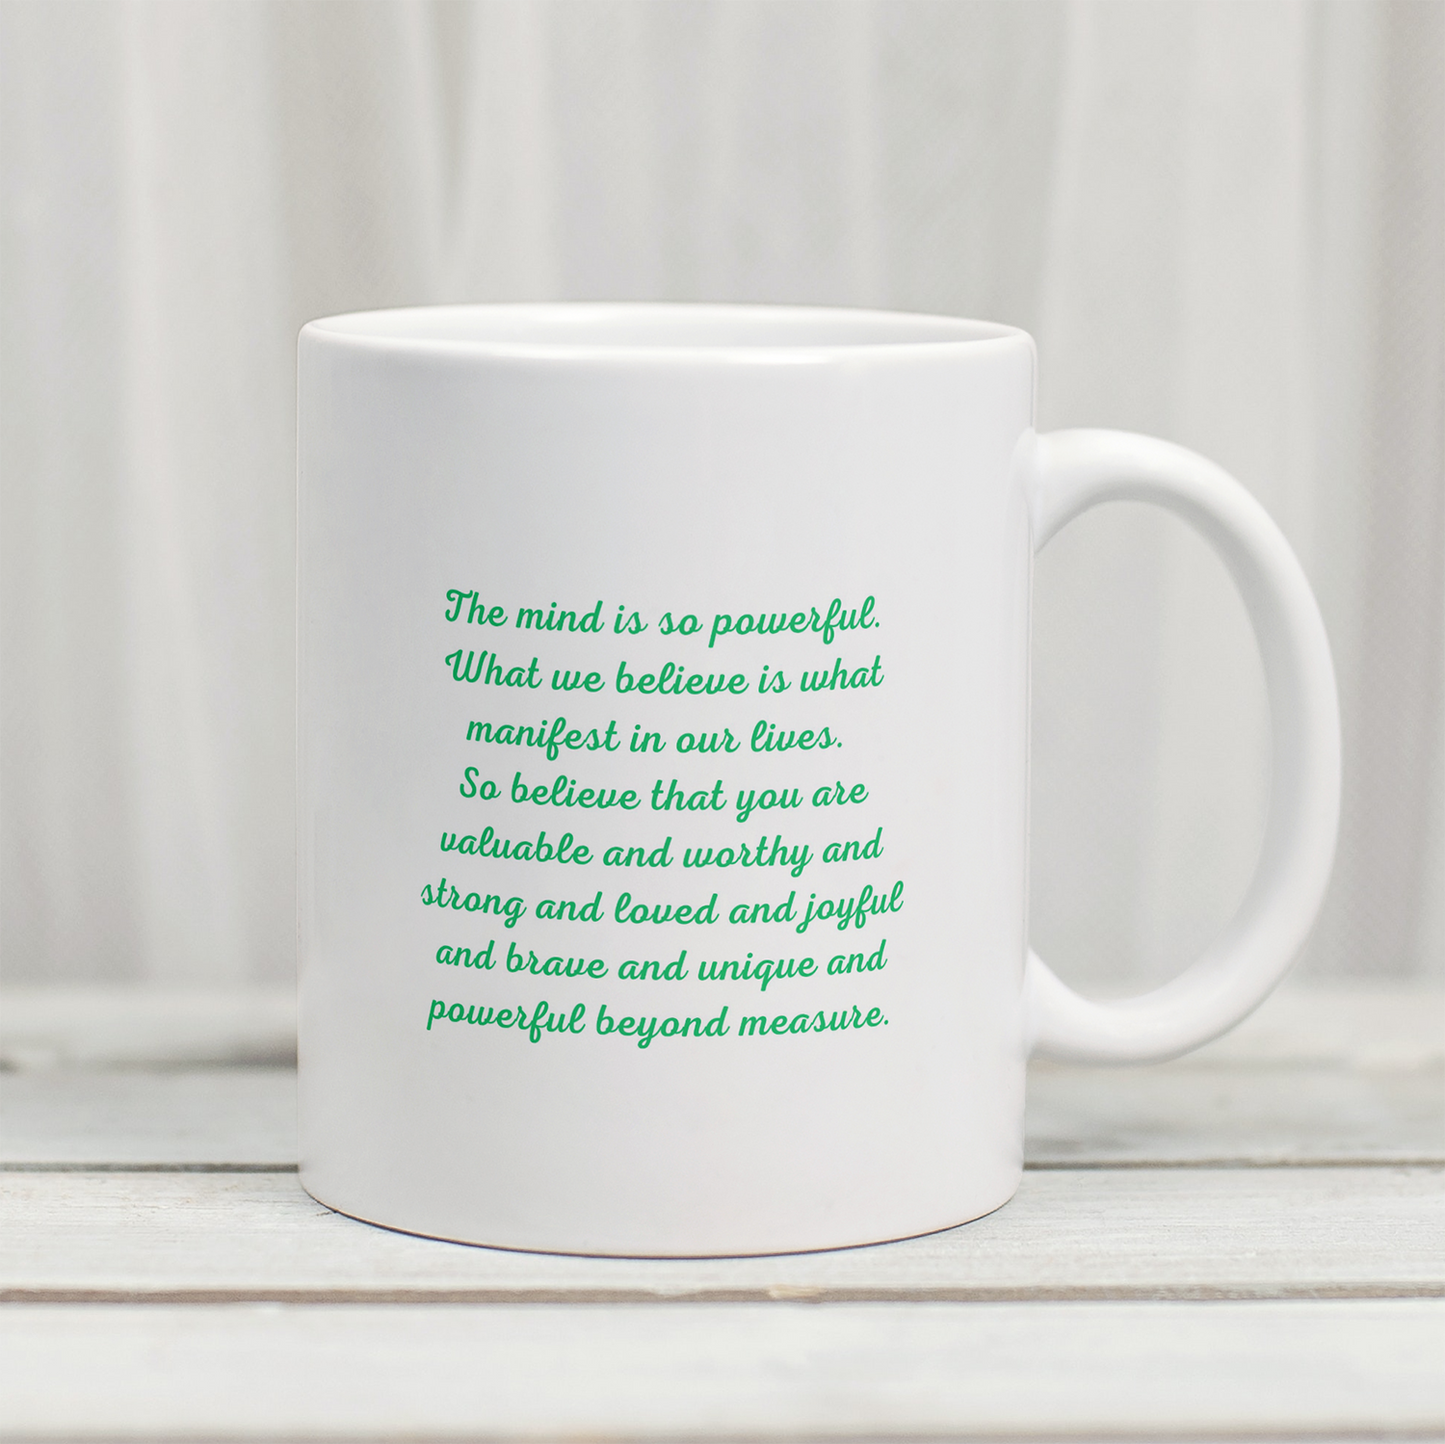 What we believe - Mug